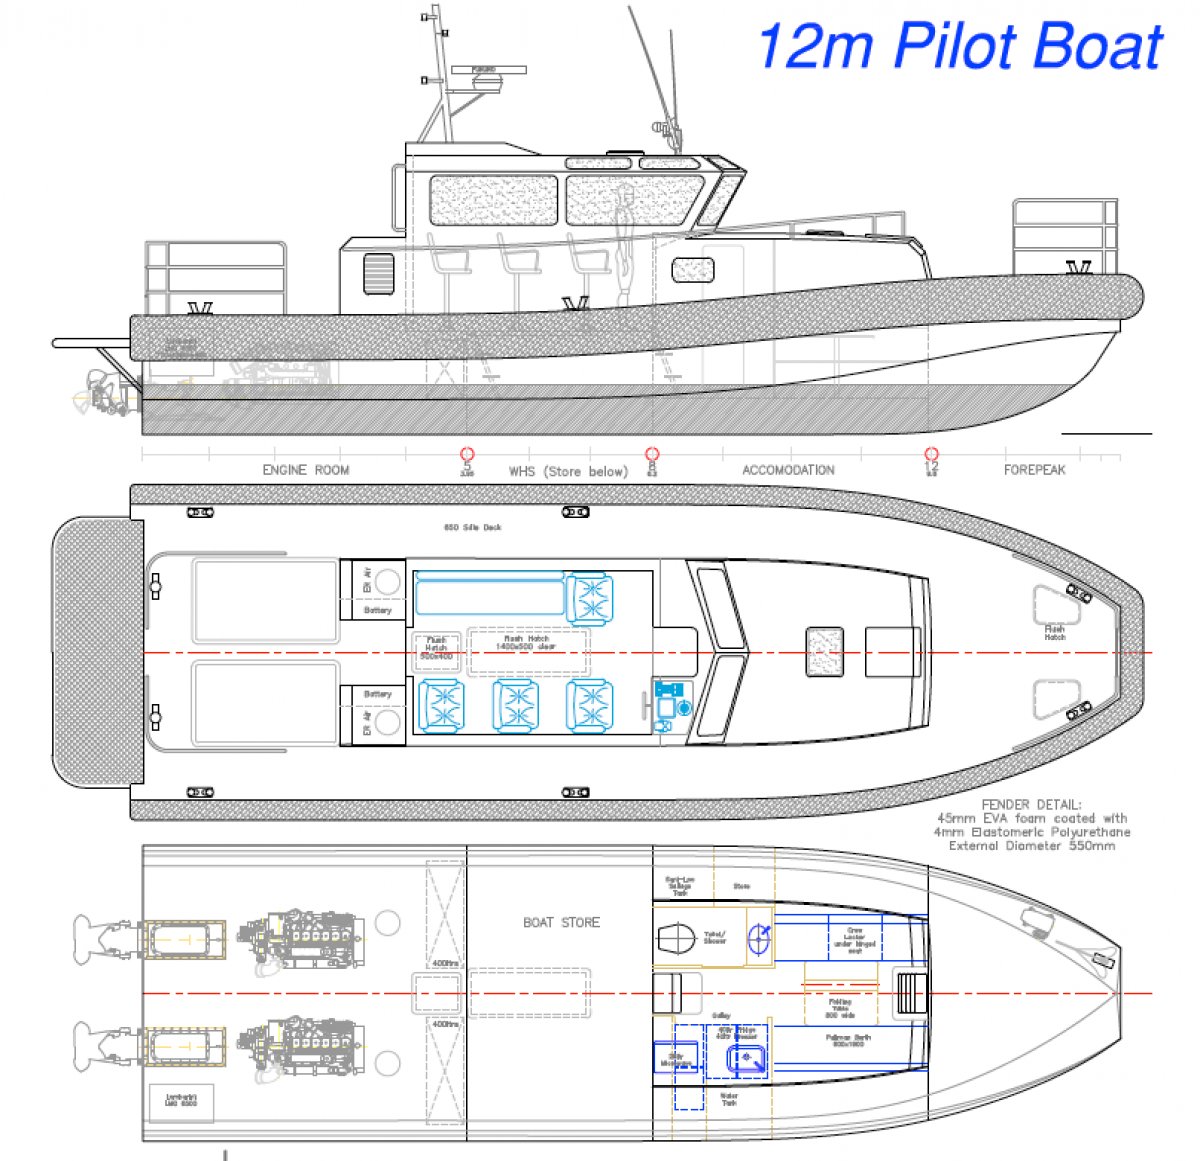 12m Pilot Boat